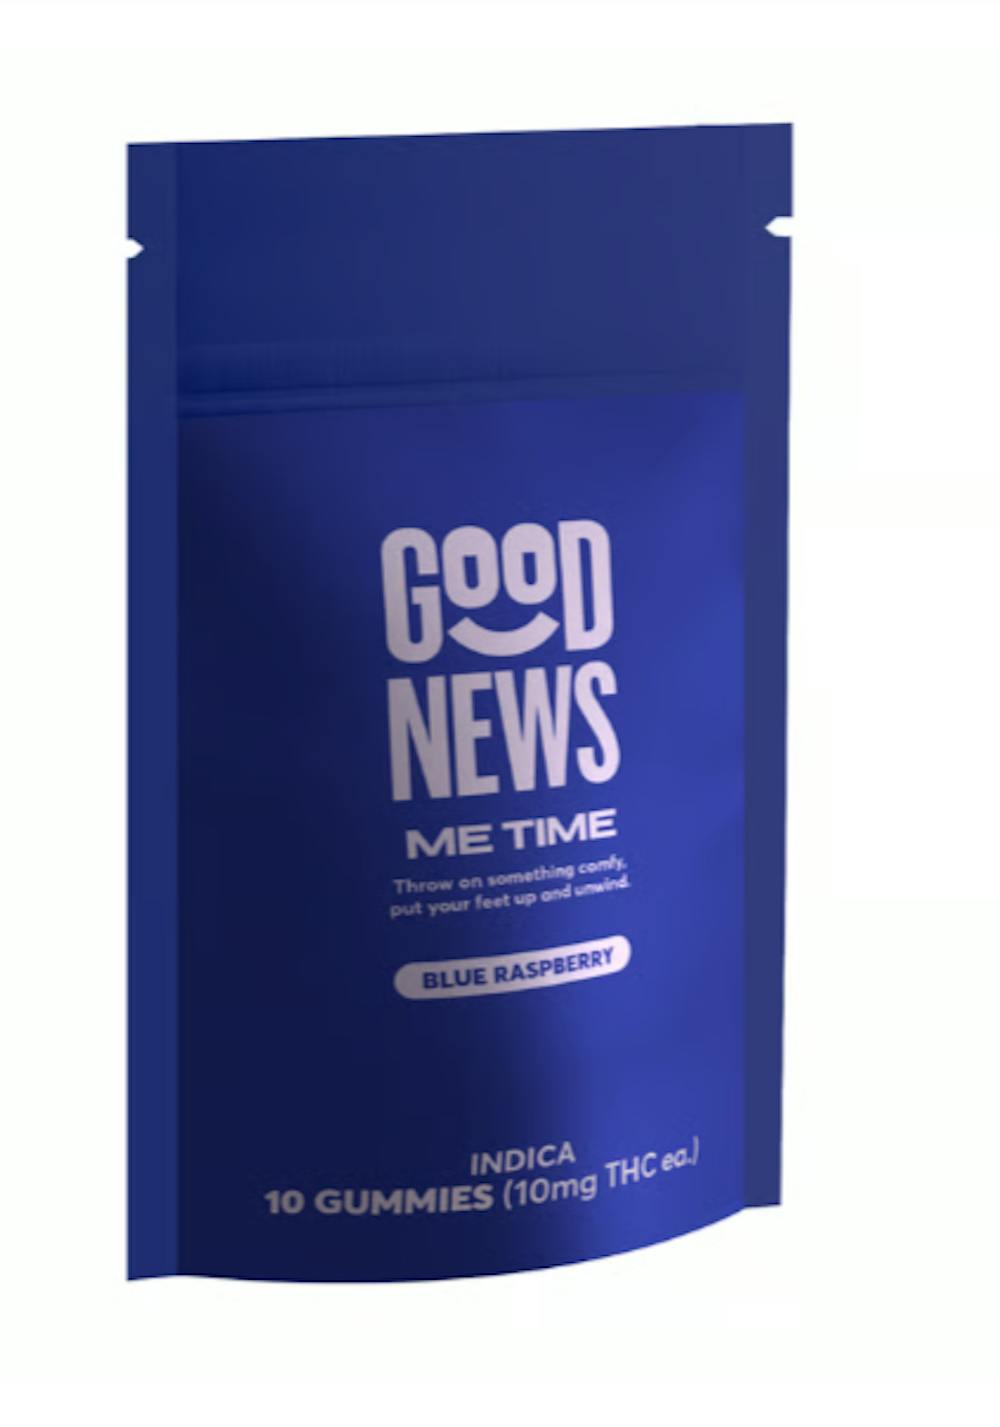 Product CL Good News Gummies - Me Time Blue Raspberry 100mg